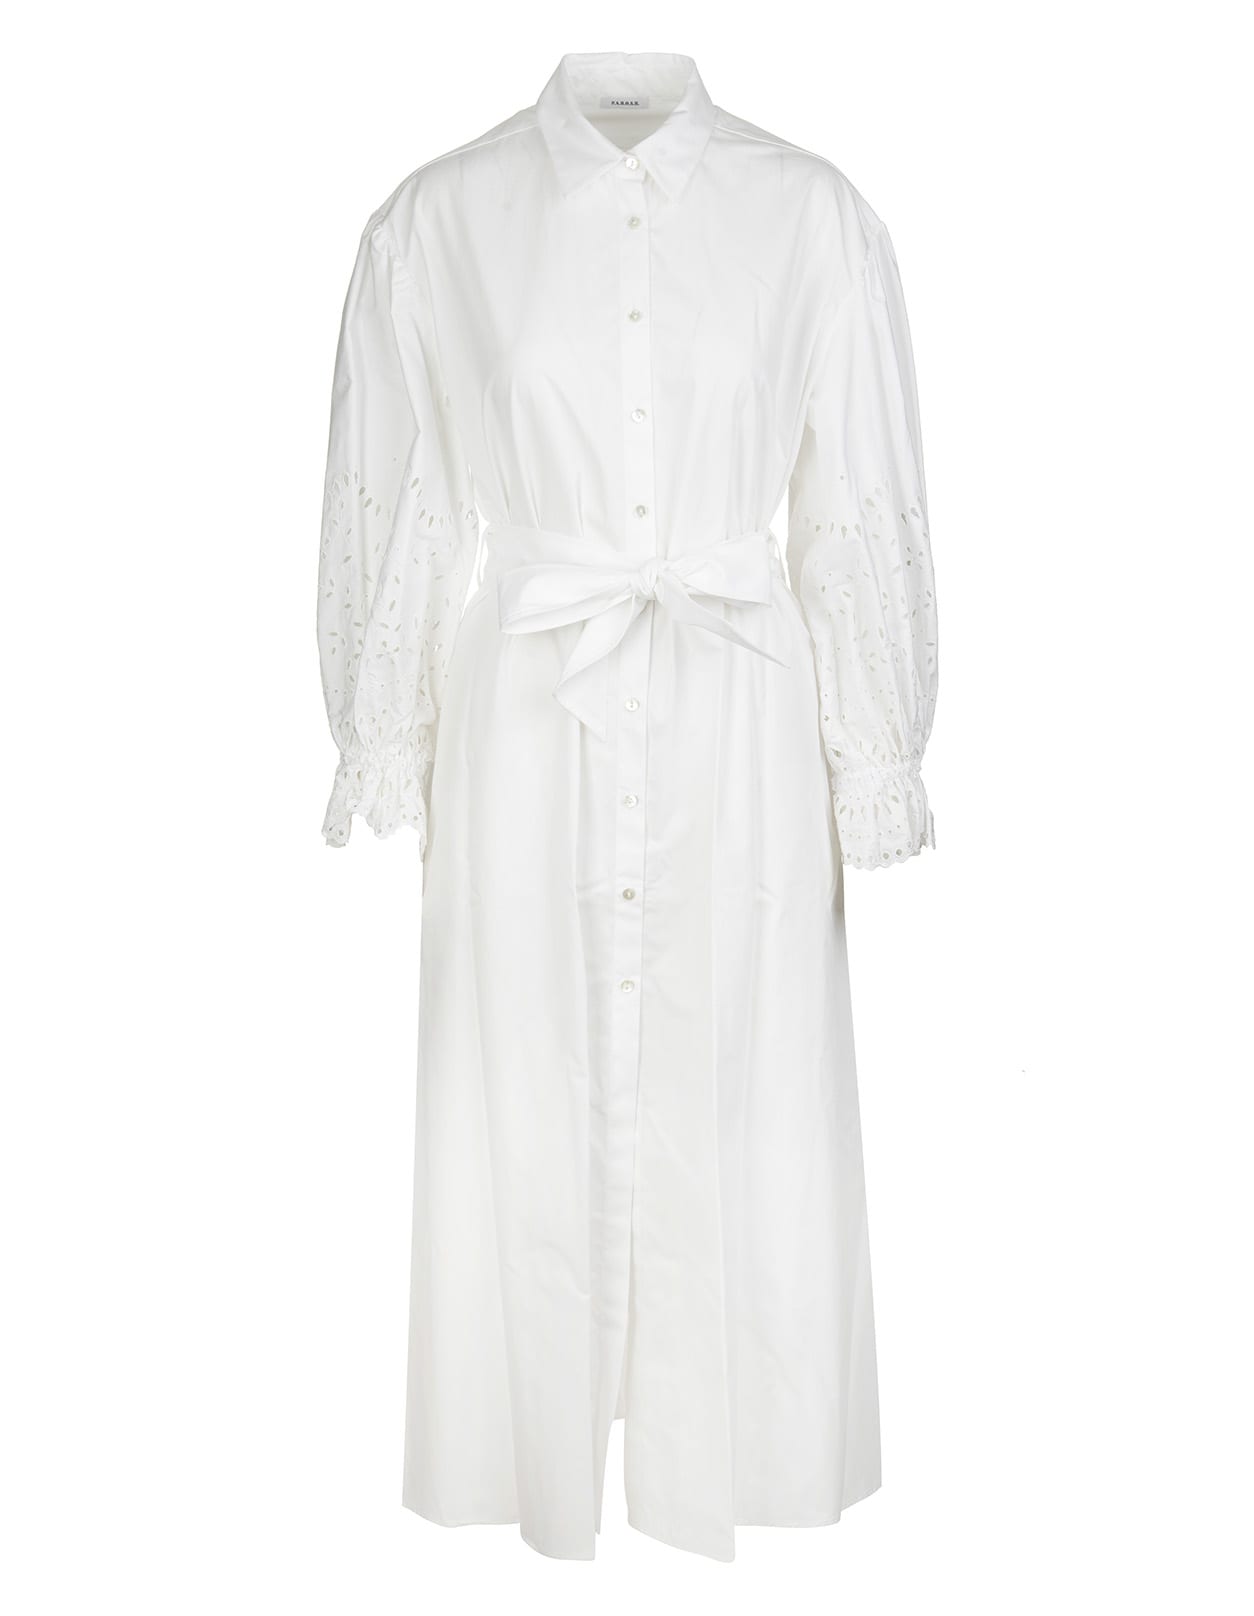 Parosh Long Sleeve White Dress